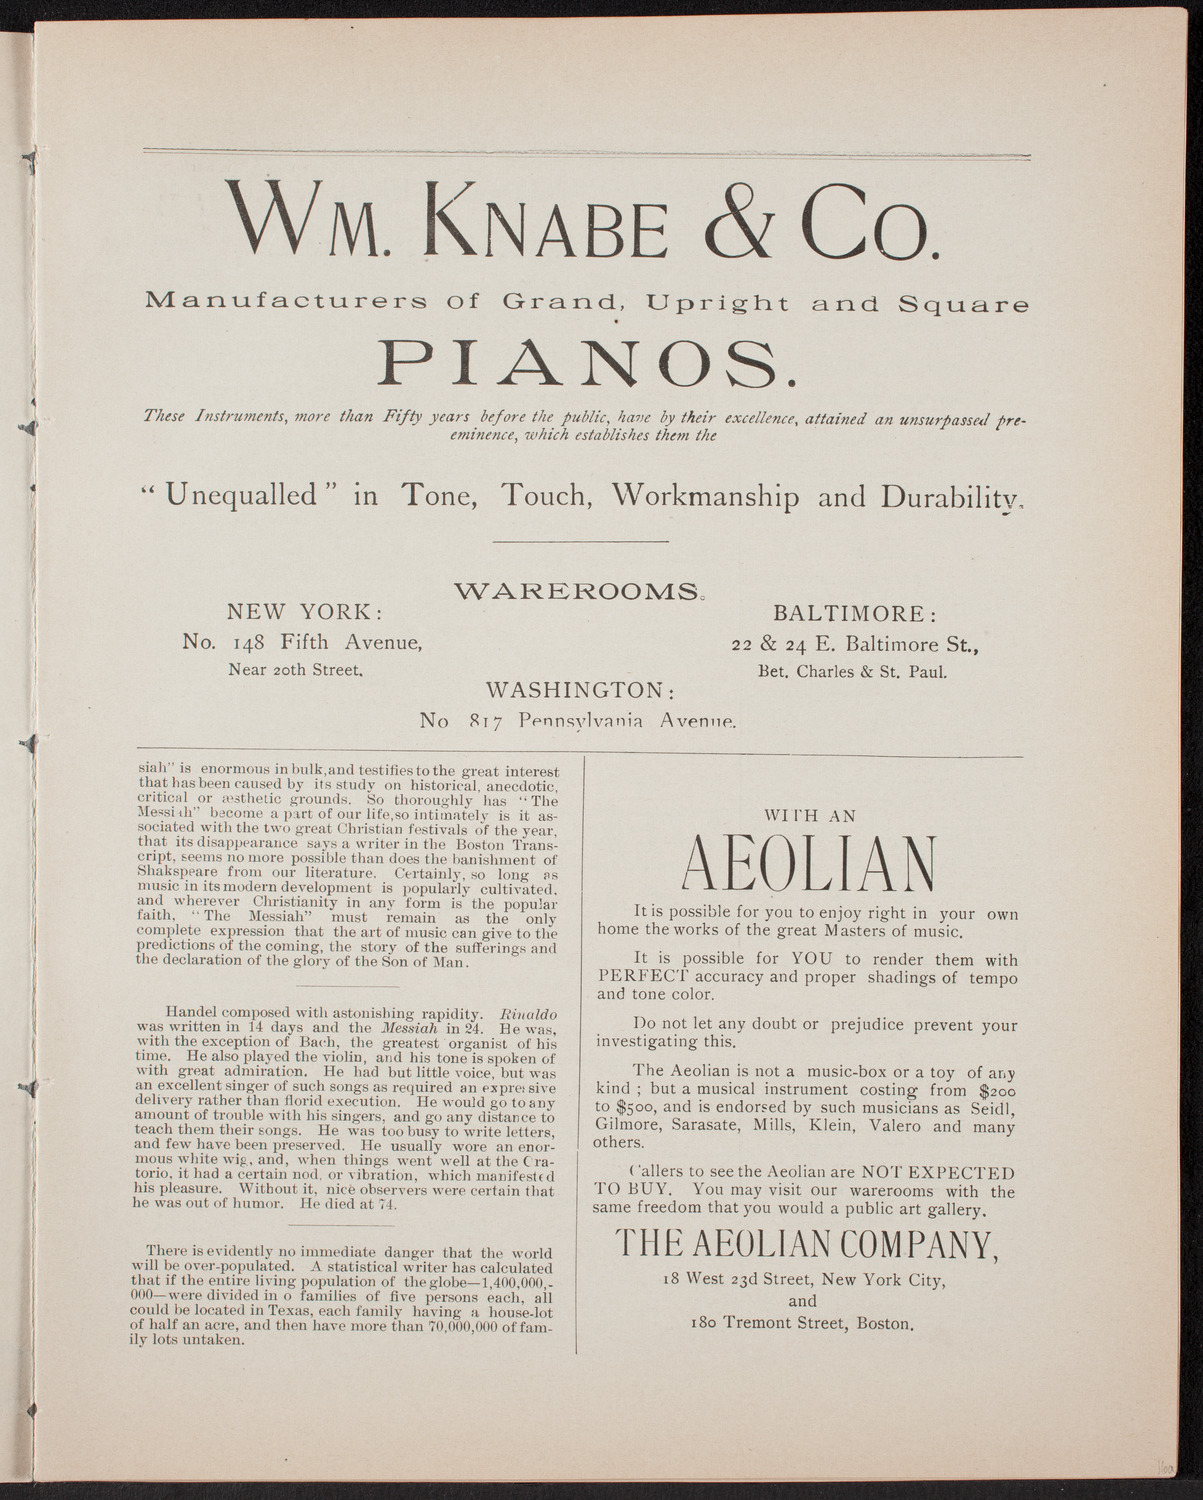 New York Symphony Orchestra: Handel Festival, April 28, 1892, program page 3